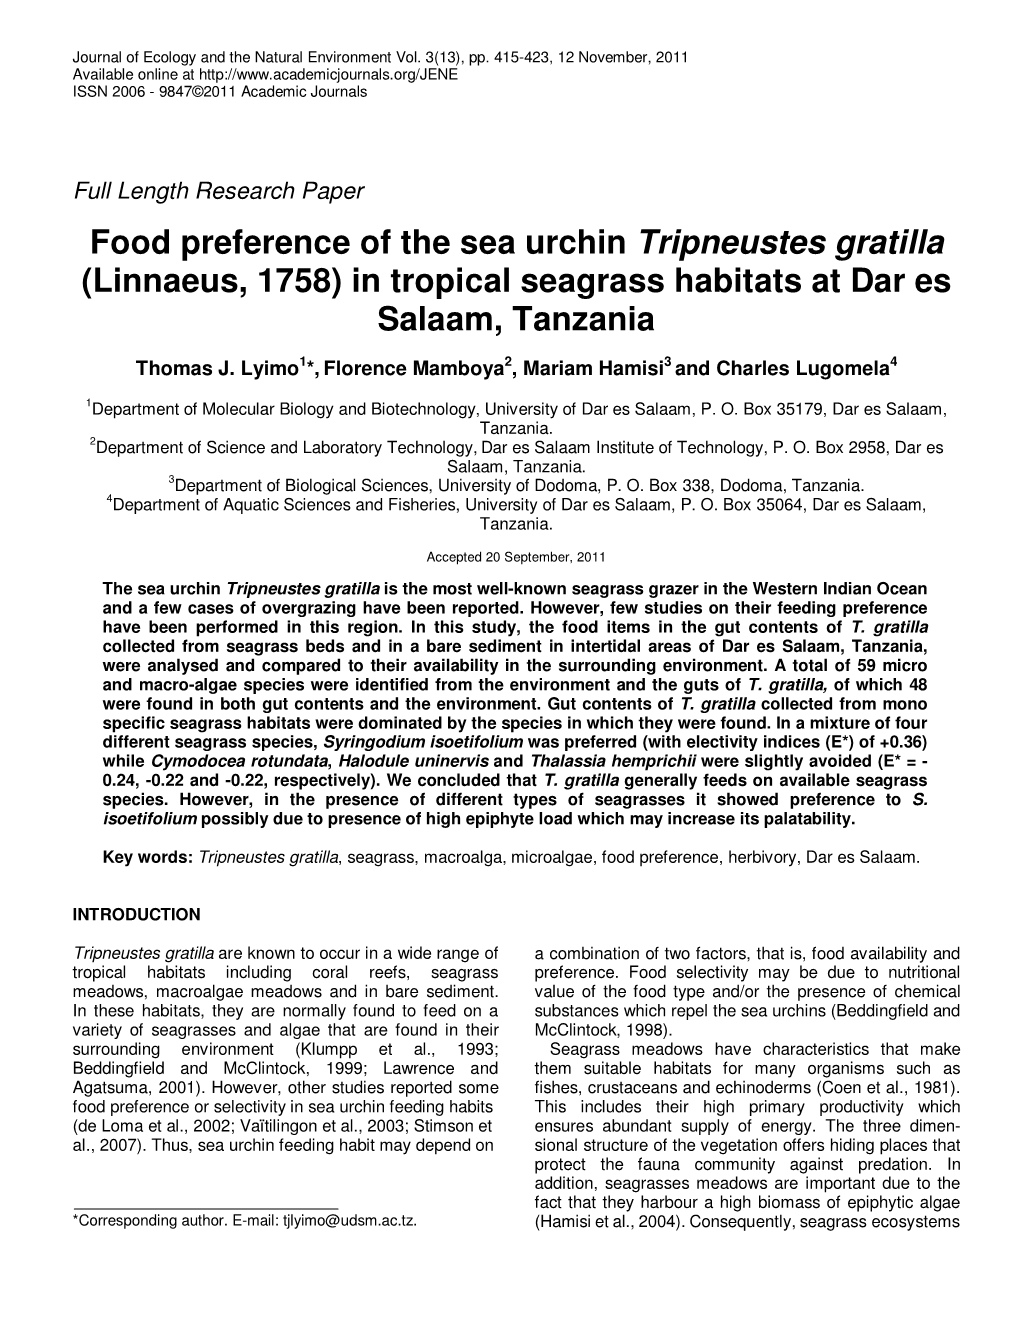 Food Preference of the Sea Urchin Tripneustes Gratilla (Linnaeus, 1758) in Tropical Seagrass Habitats at Dar Es Salaam, Tanzania